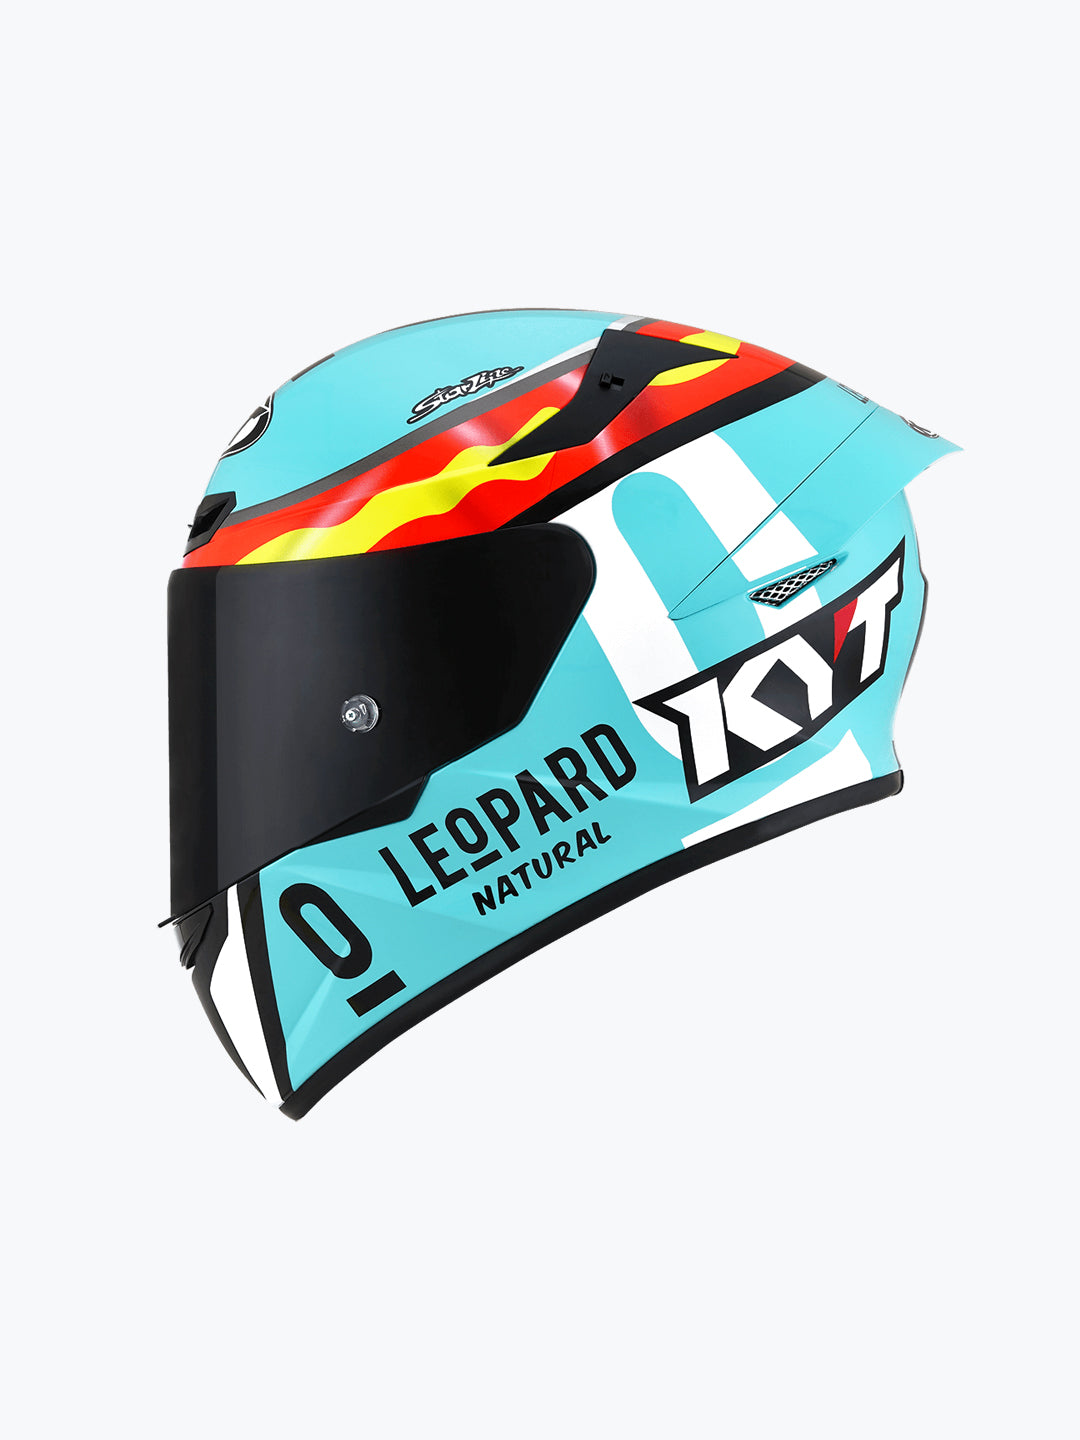 KYT TT Course Leopard Replica Spaniard(Jaume Masia)